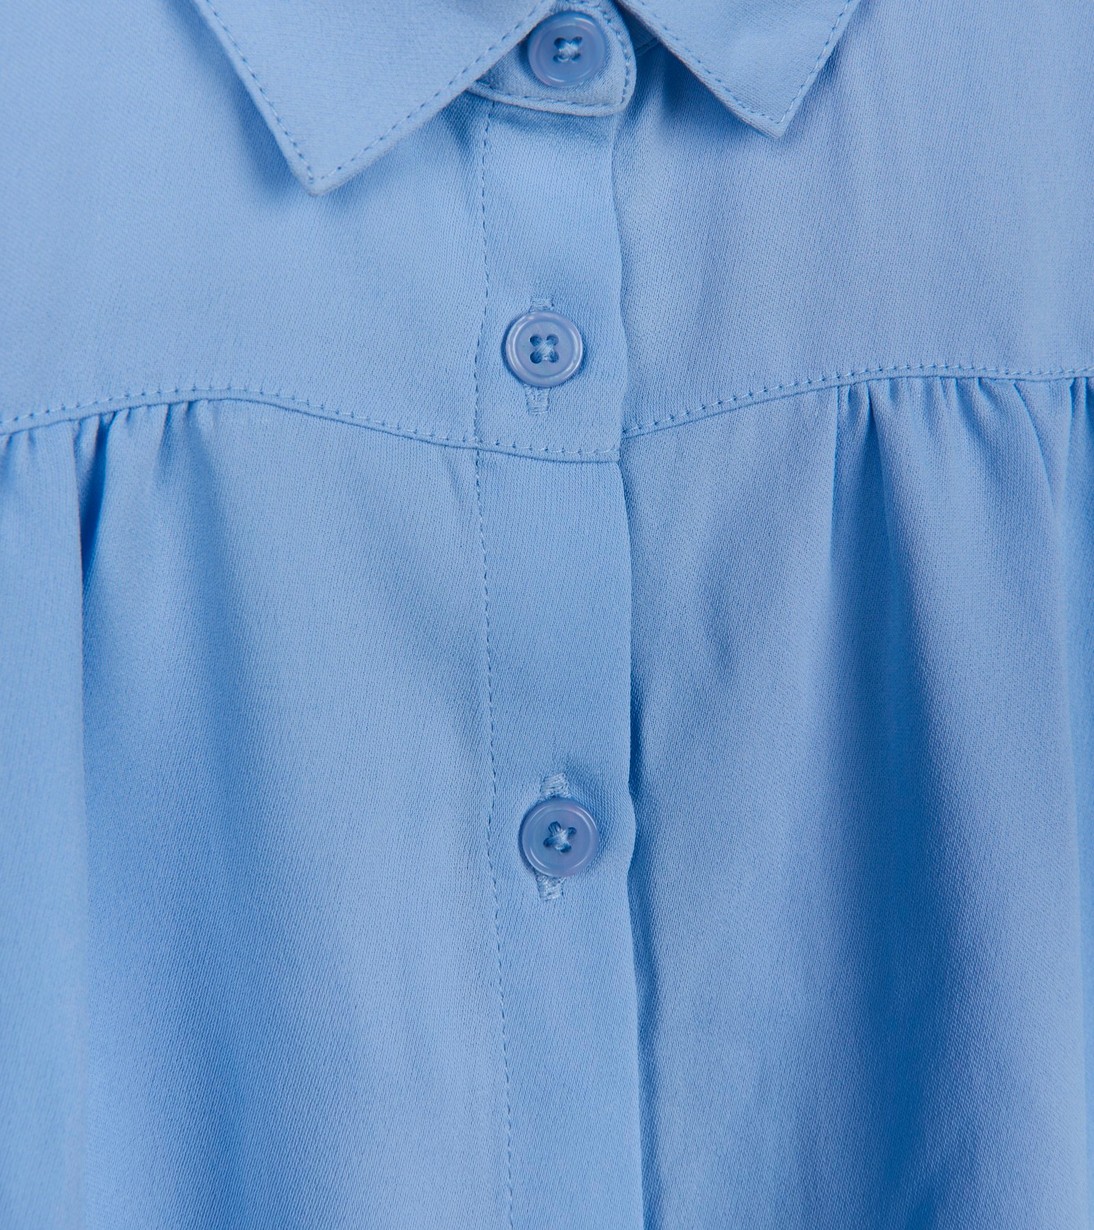 CKS Kids - ECHO - blouse short sleeves - blue